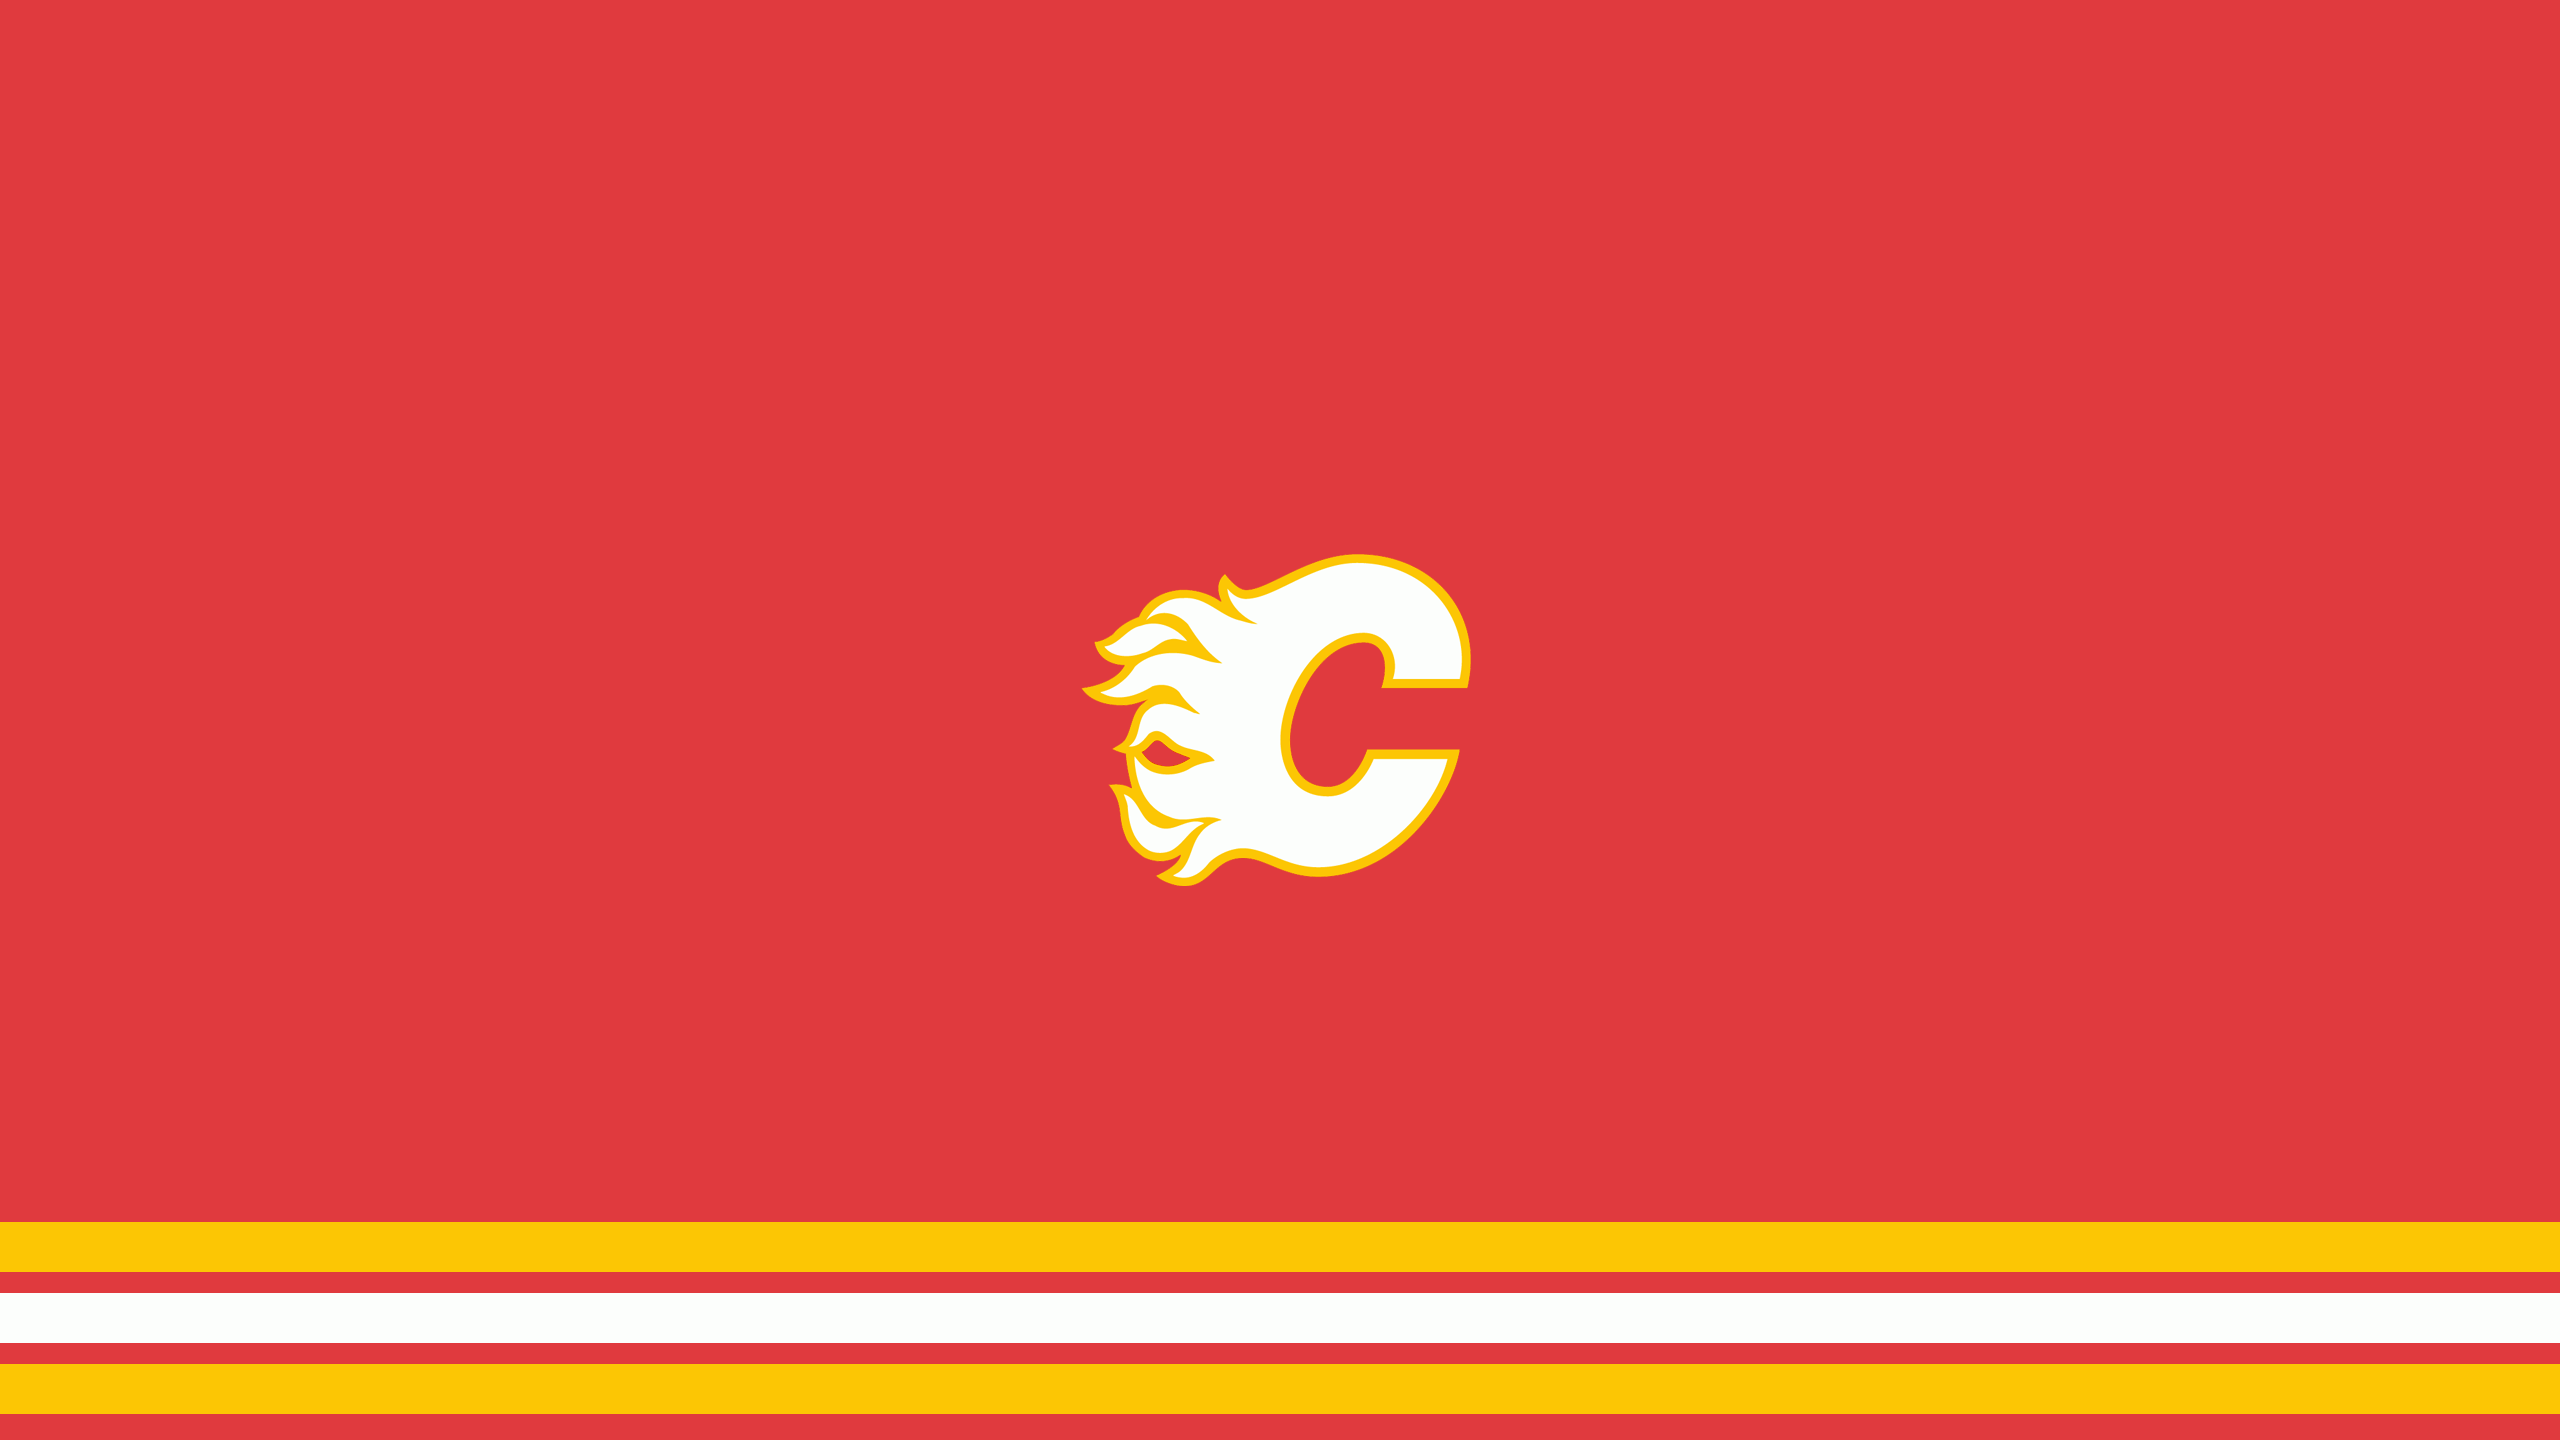 Calgary Flames - NHL - Square Bettor